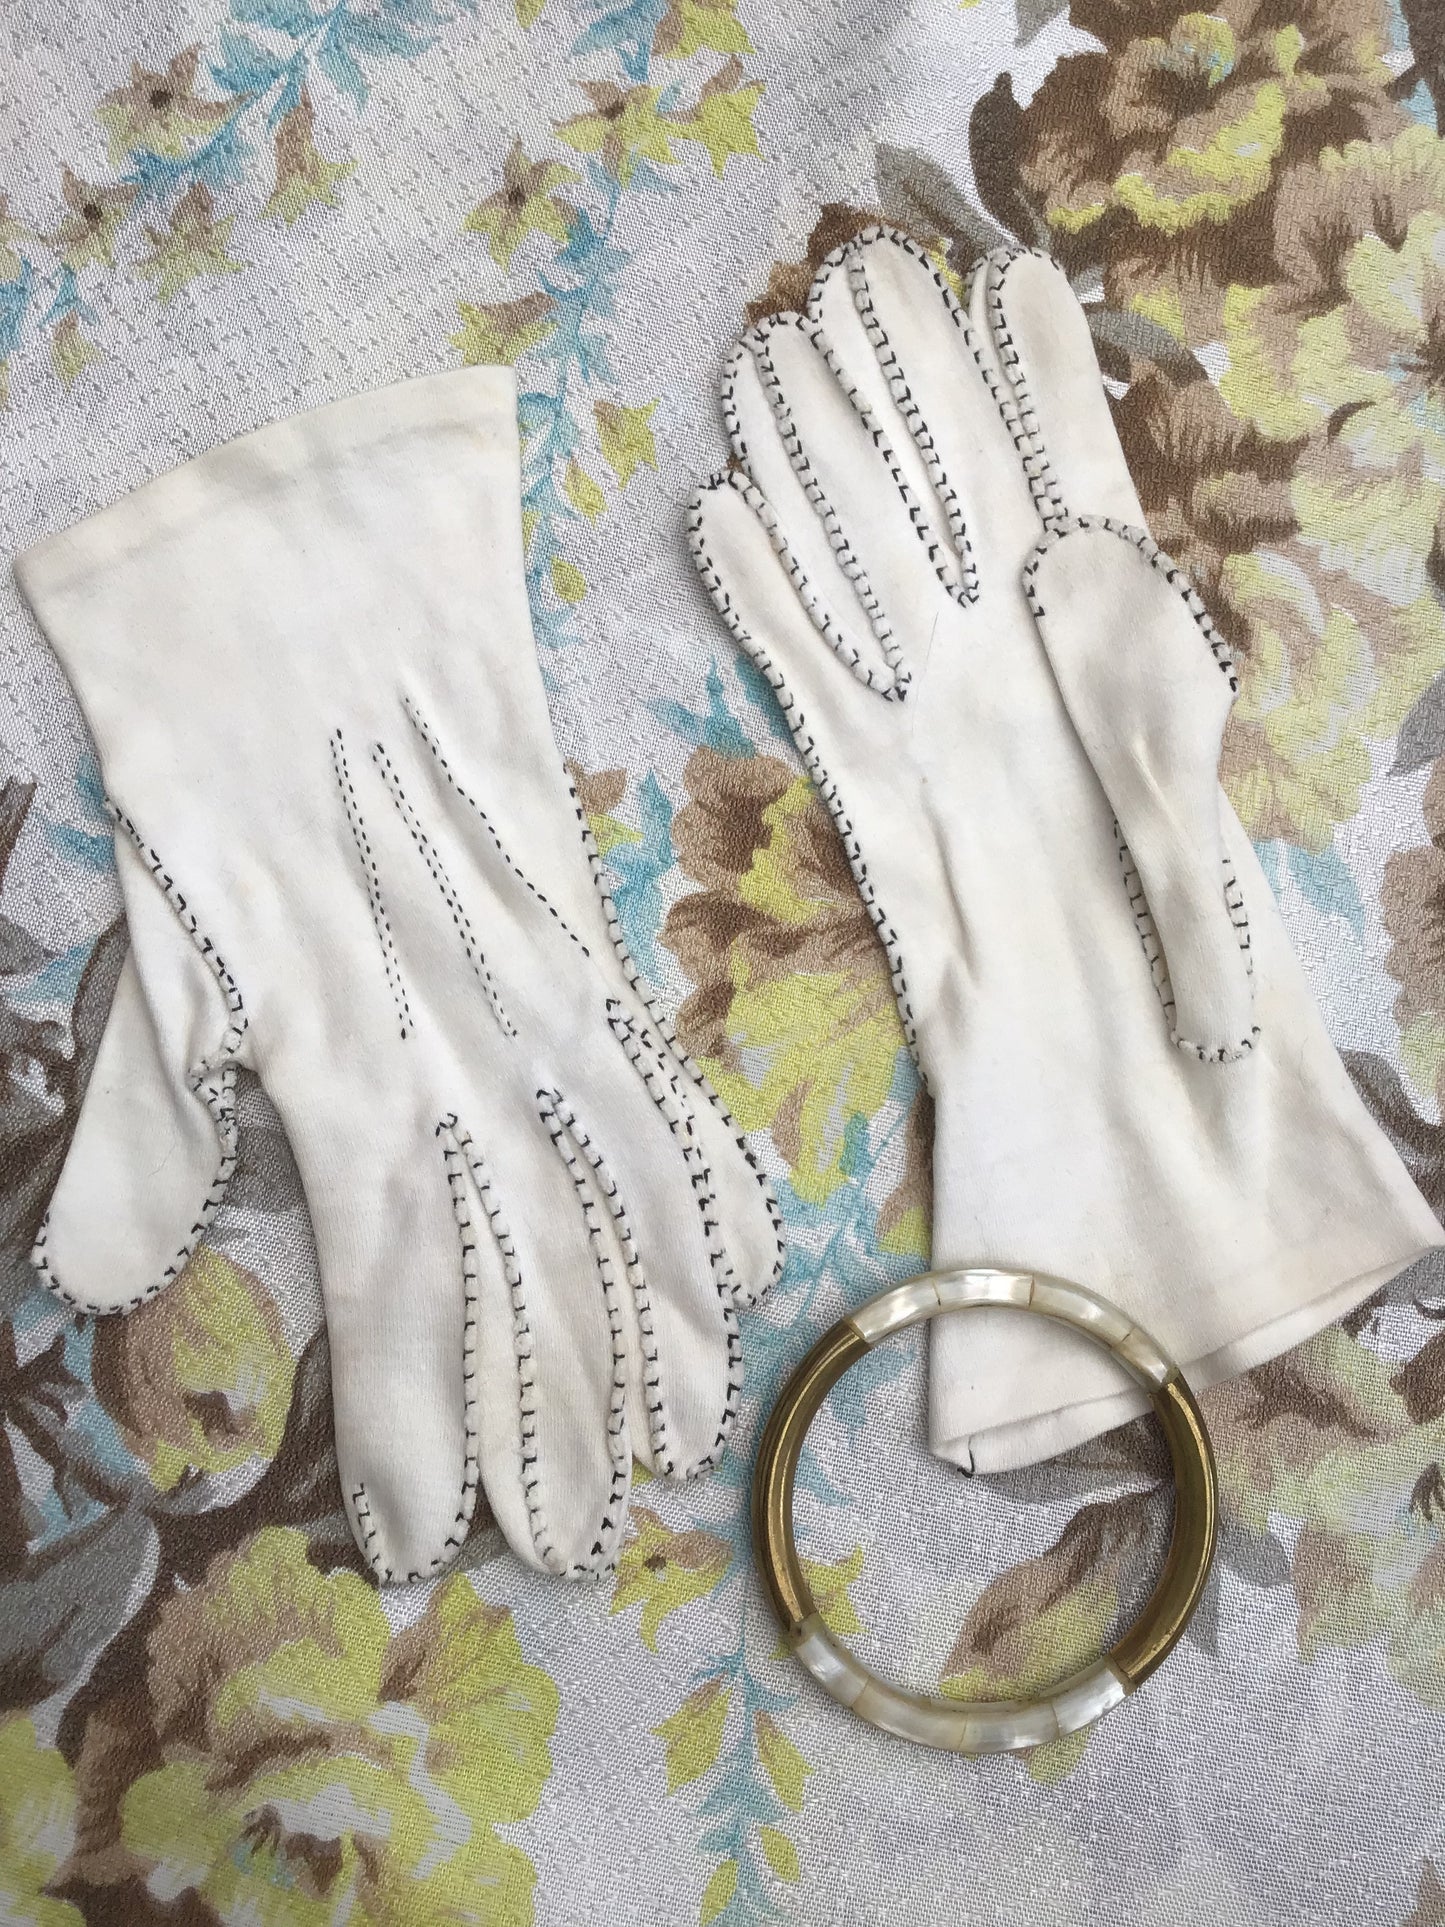 1950s Vintage White Cotton Gloves 🖤 Contrasting Black Stitching